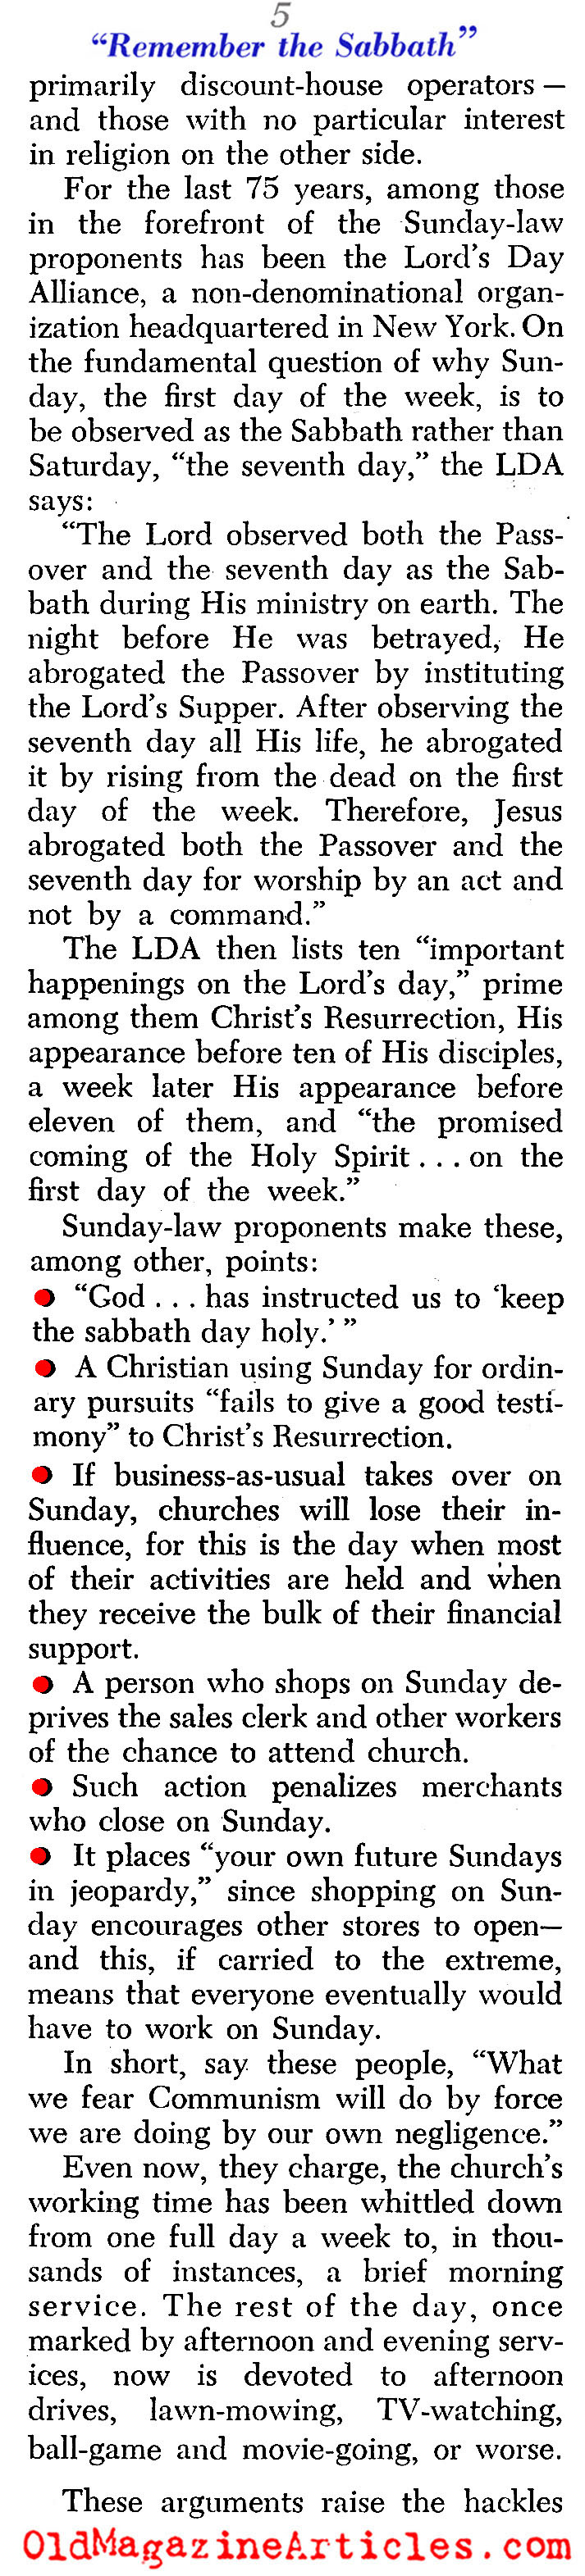 Sabbath Challenges (Christian Herald, 1963)